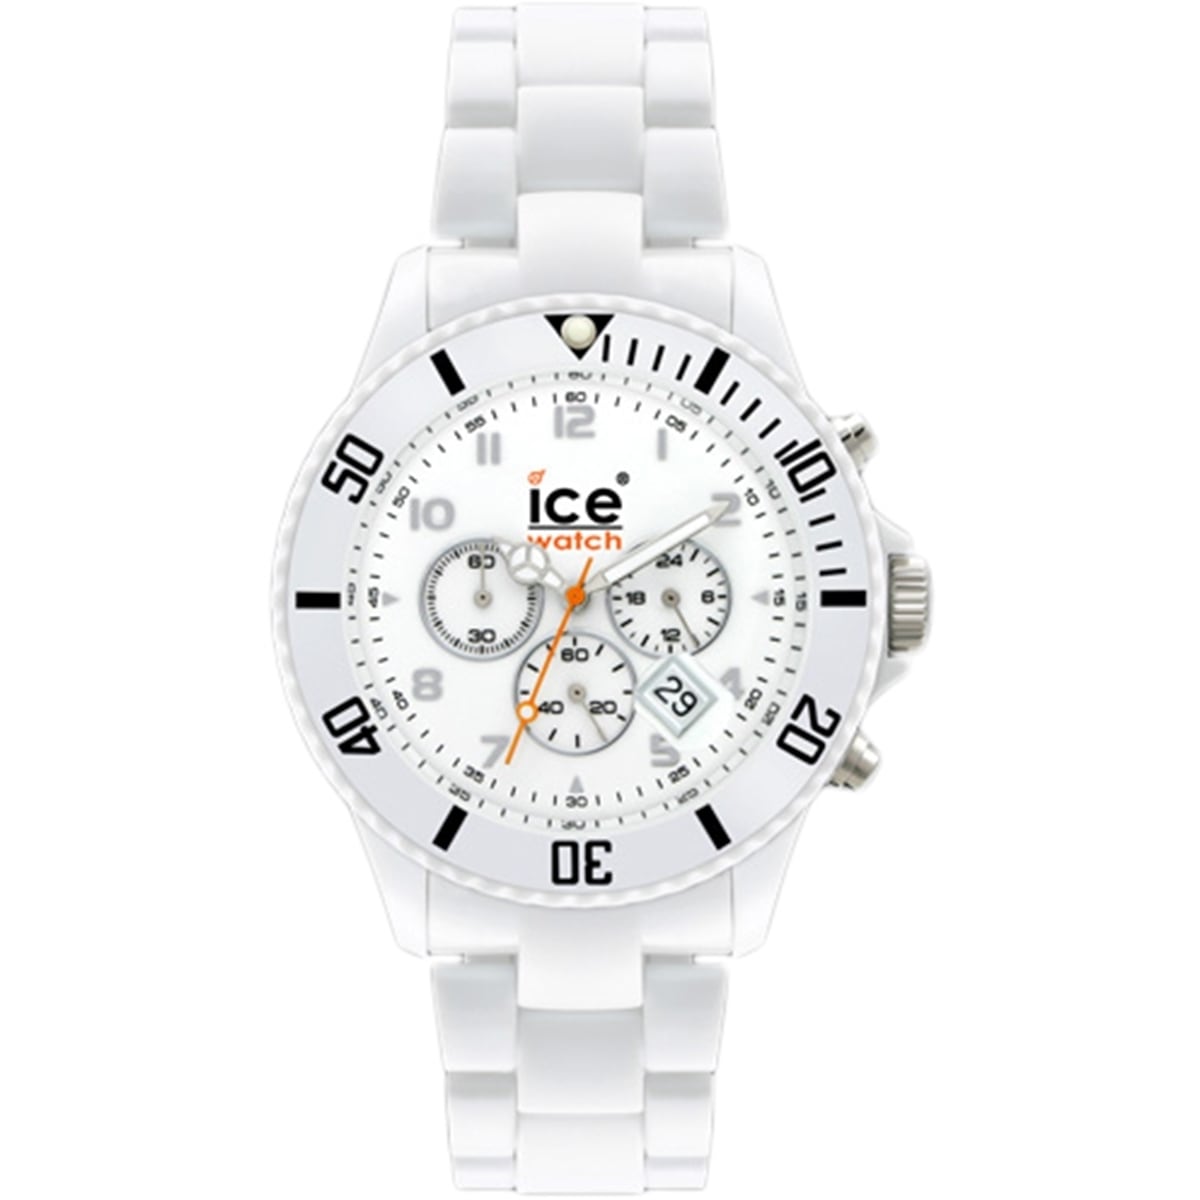 Ice watch часы. Часы айс вотч белые. Ice watch Stainless Steel caseback. Часы айсце айс вотч 10 ATM. Часы Ice белые.